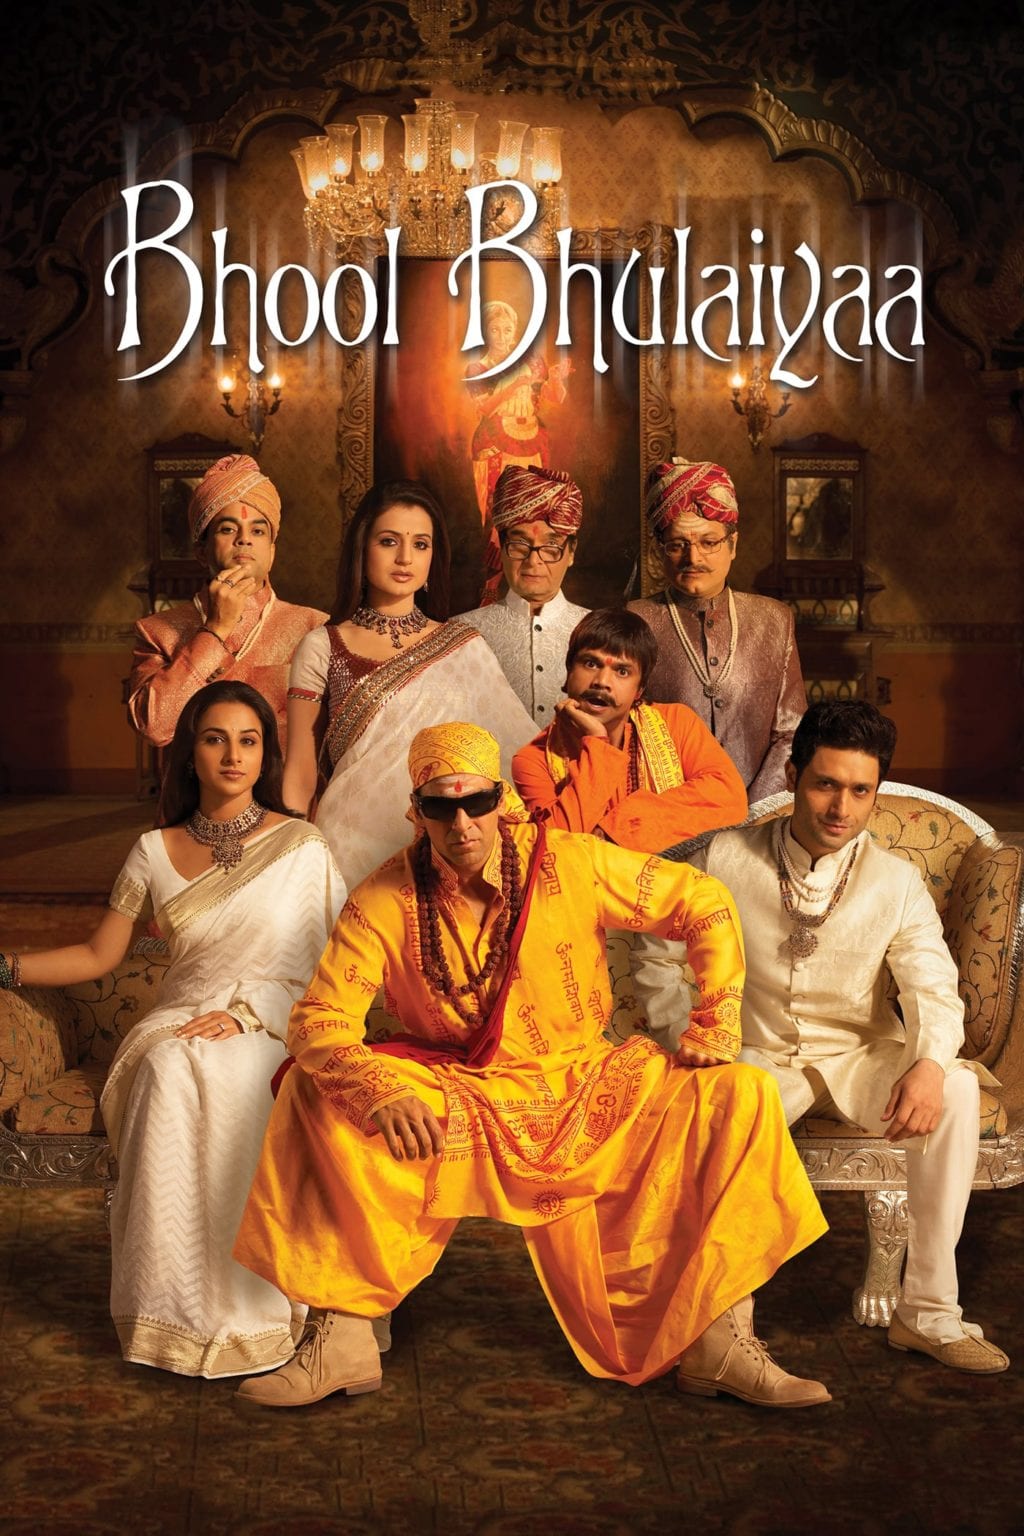 Watch Bhool Bhulaiyaa Full Movie Online For Free In HD Quality